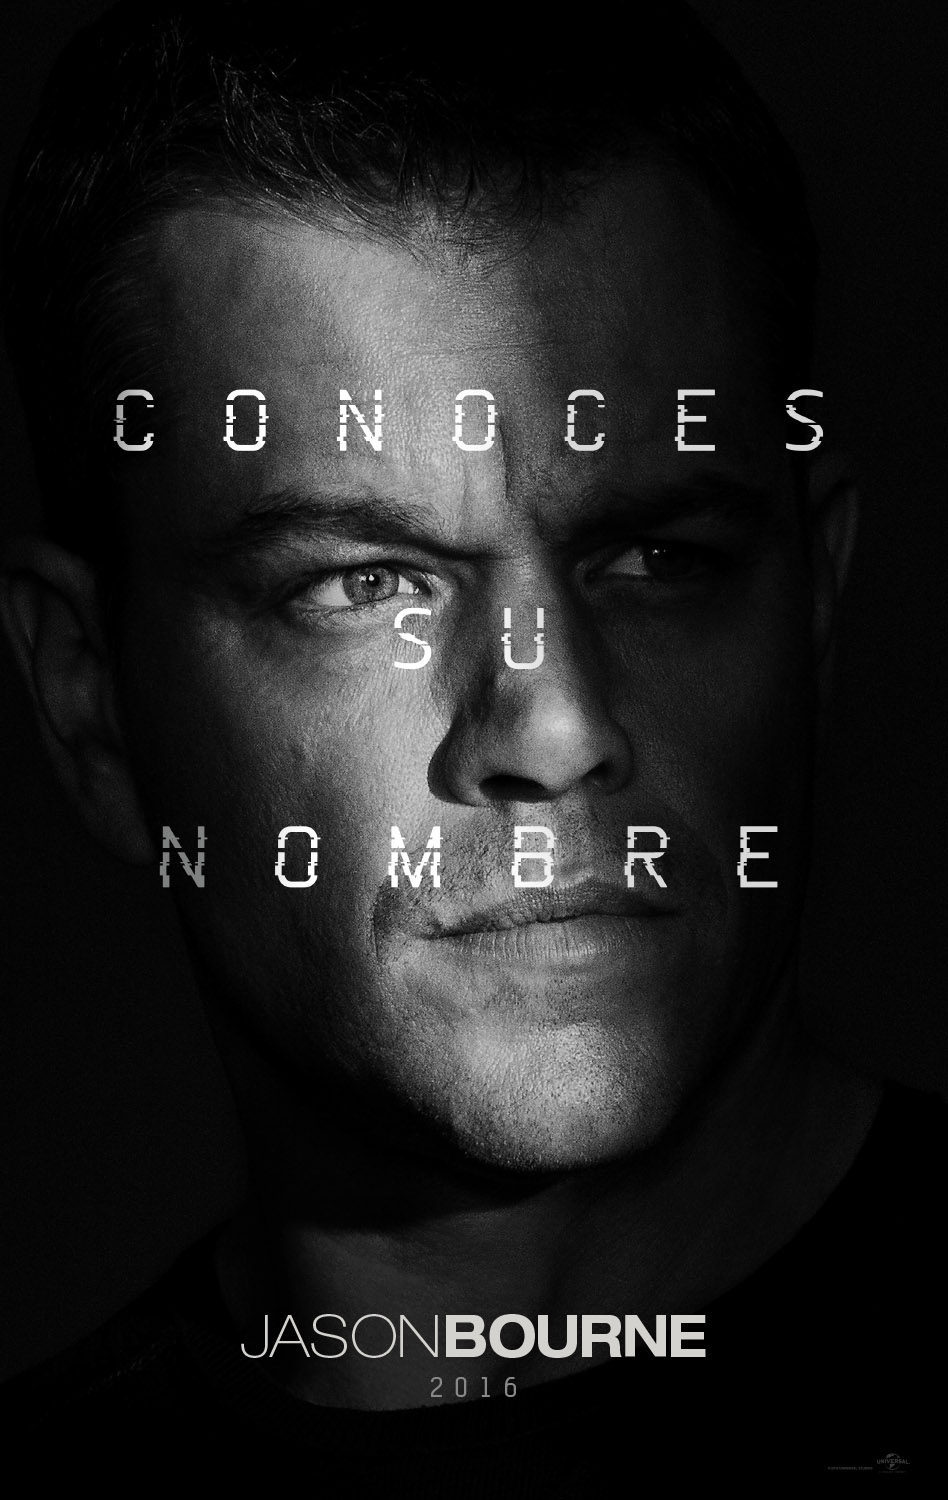 Poster of Jason Bourne - España #2